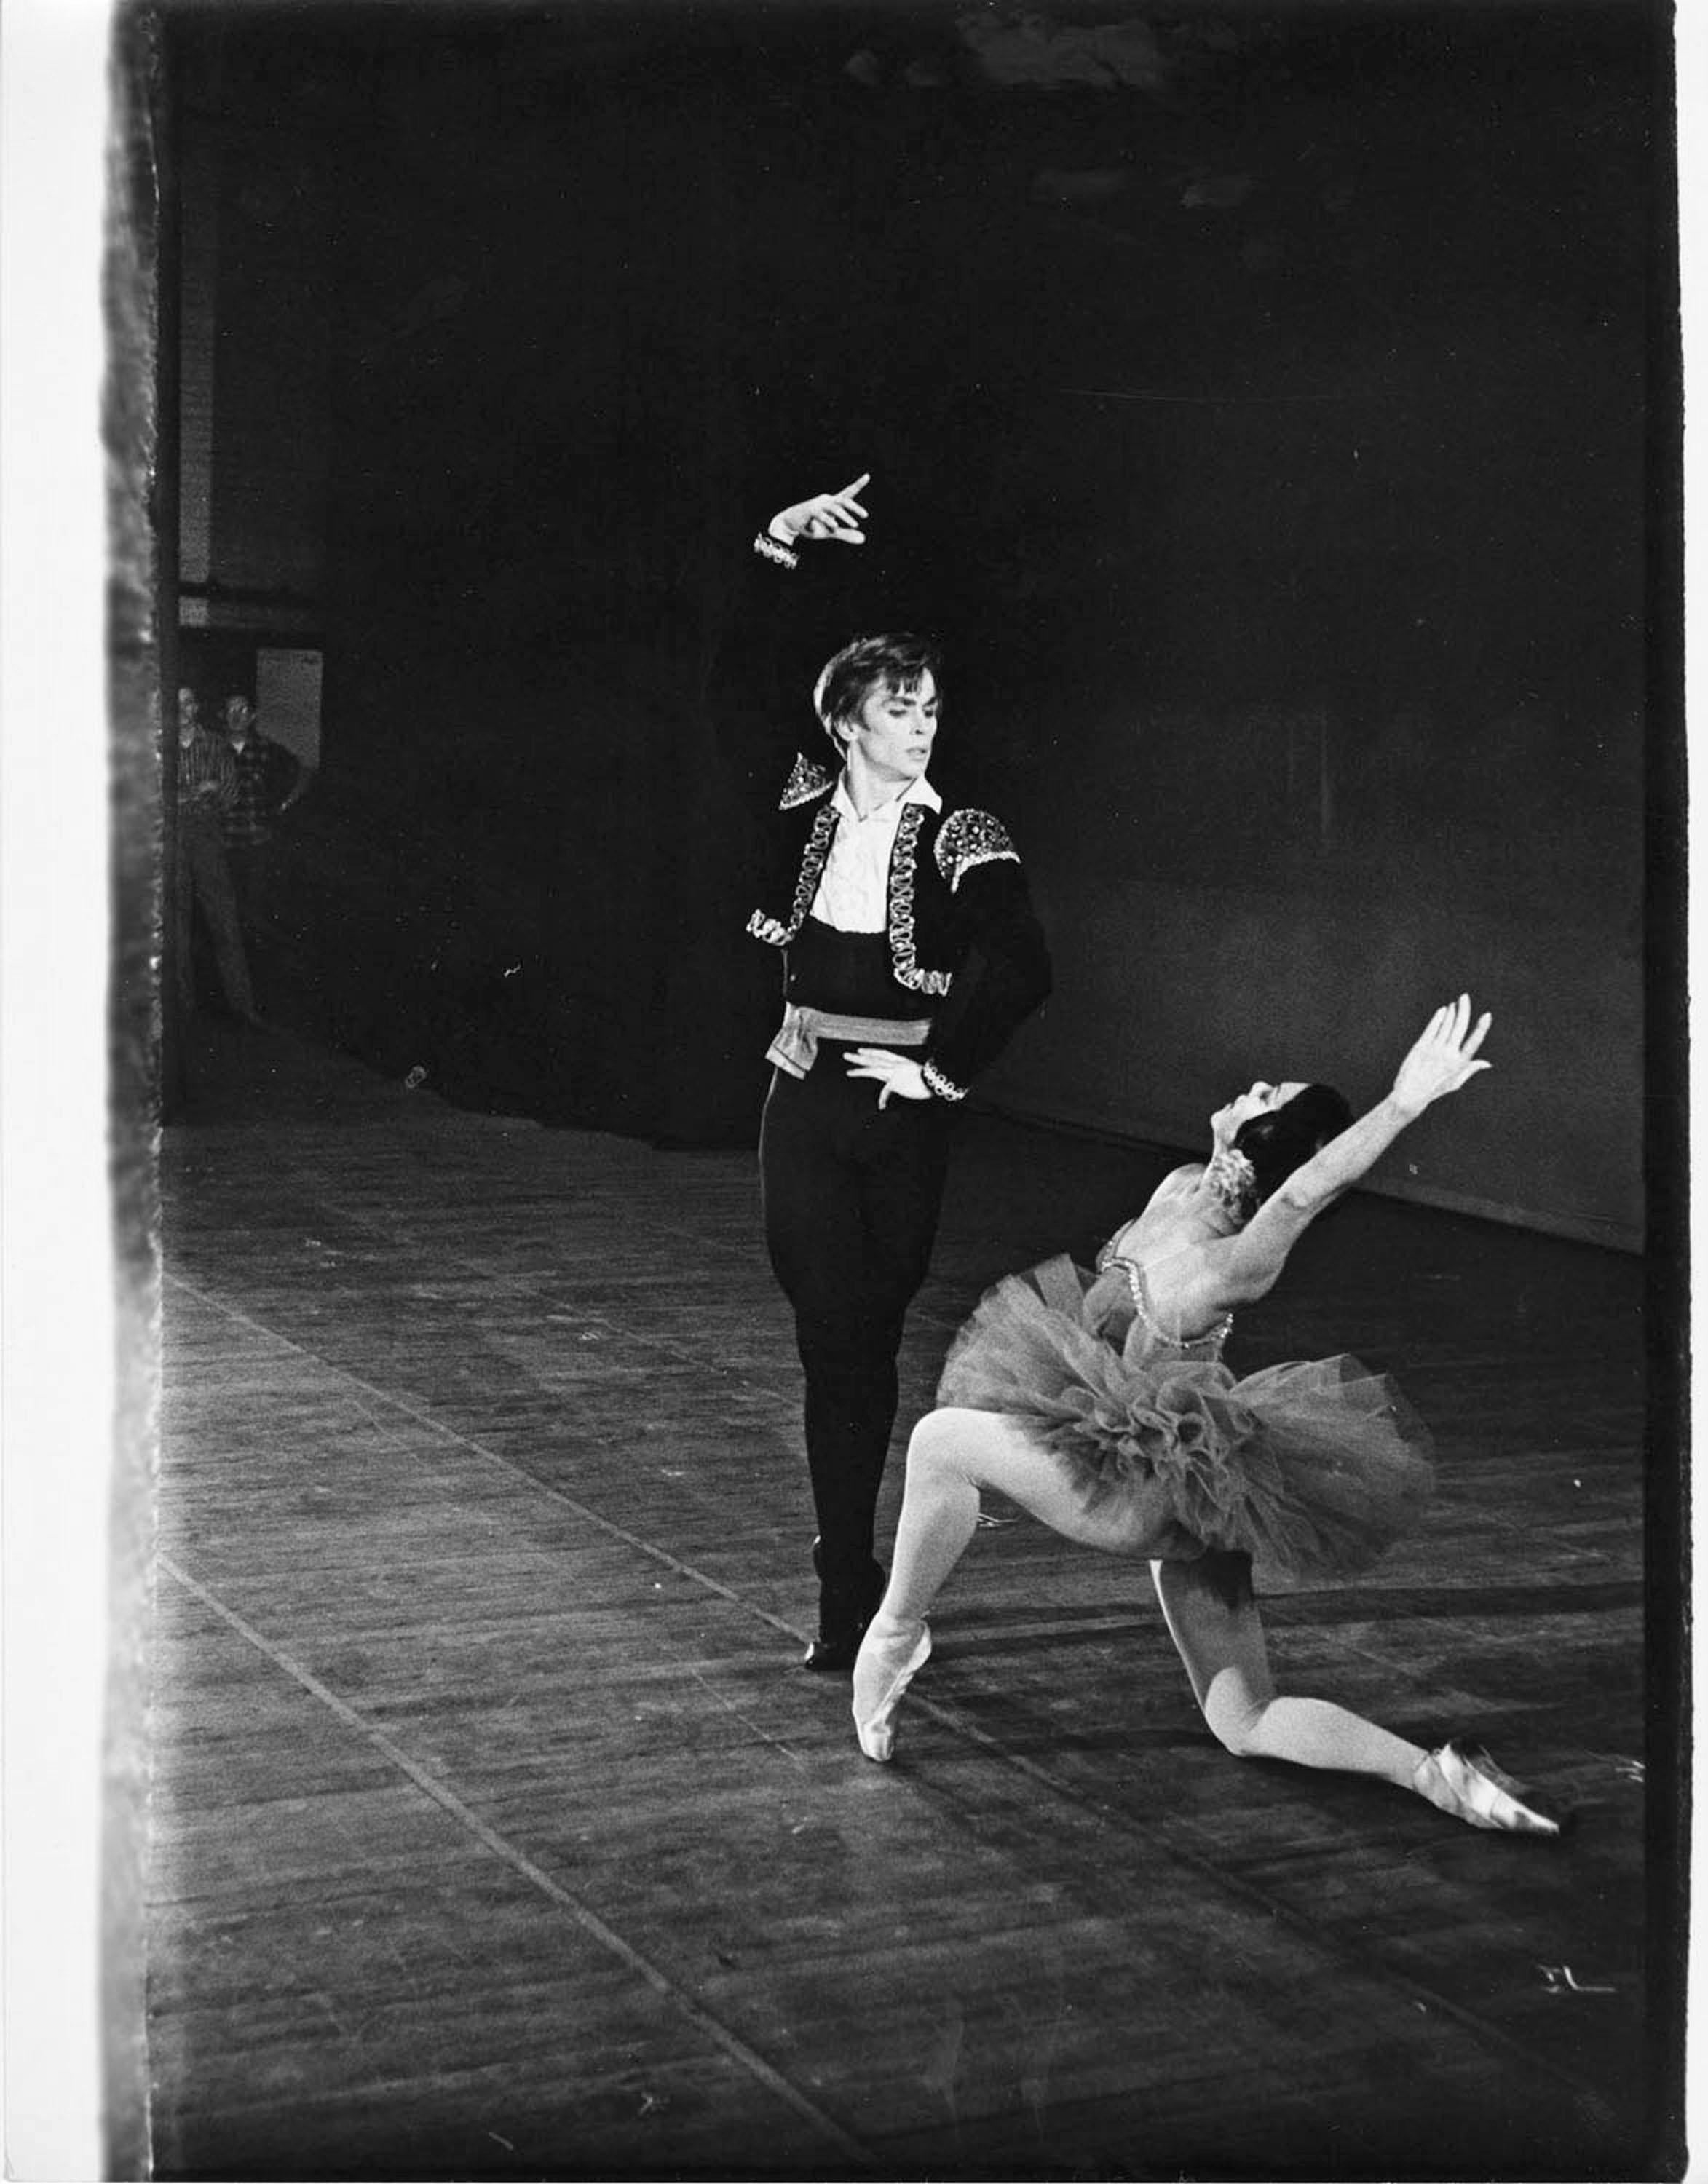 Rudolf Nureyev photographed in his American debut performance May 10, 1962.